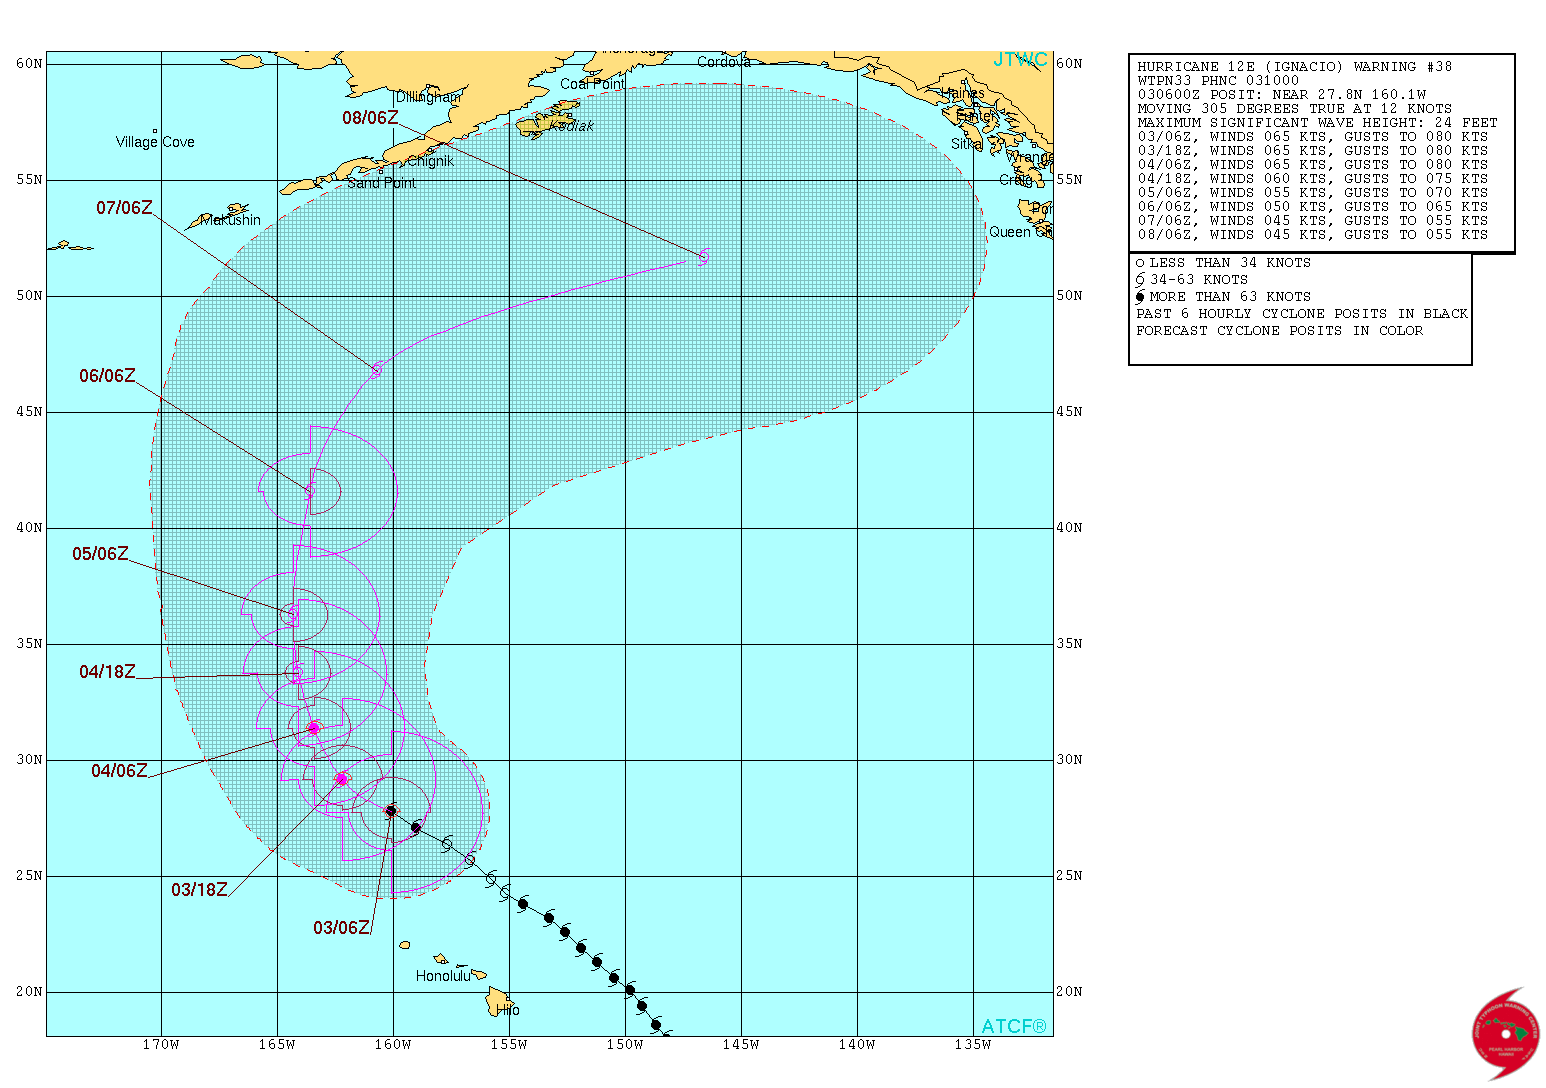 JTWC TS 12 2015 Forecast 38